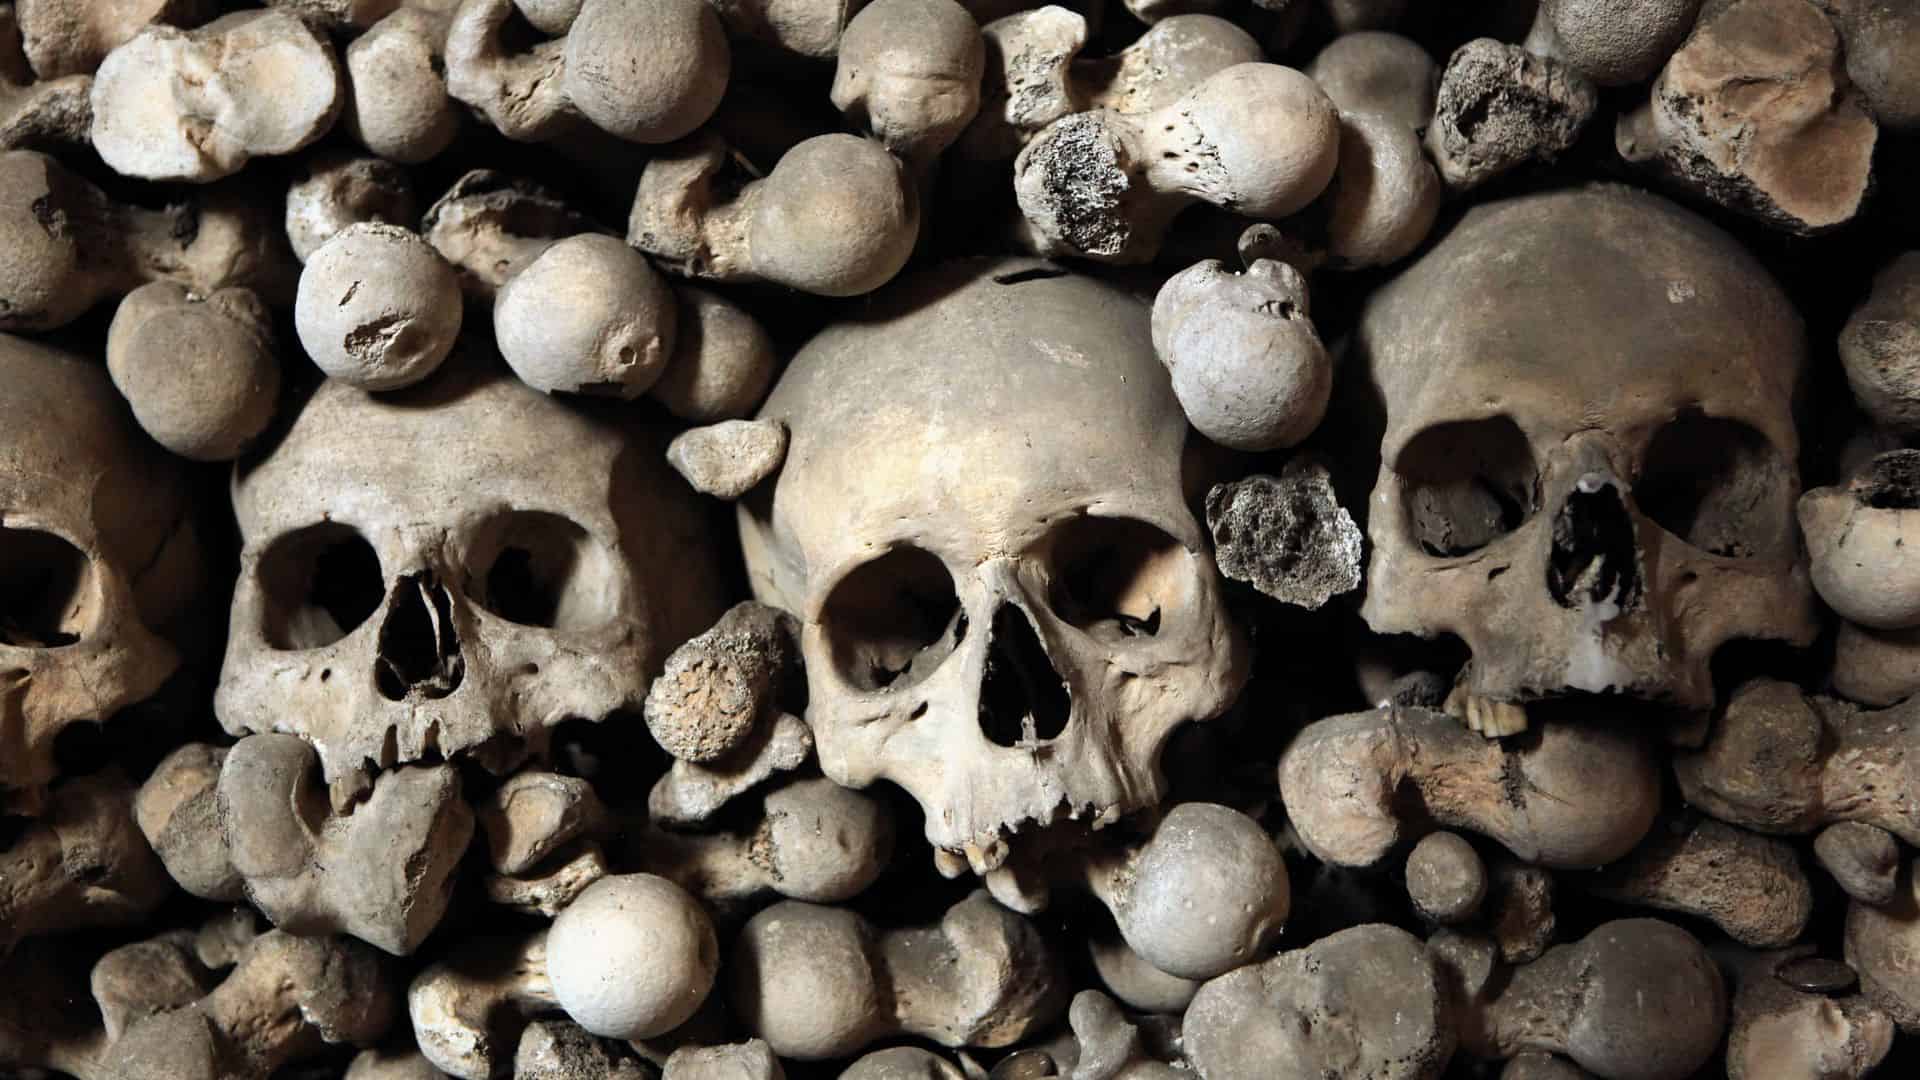 Skulls and bones in an ossuary.